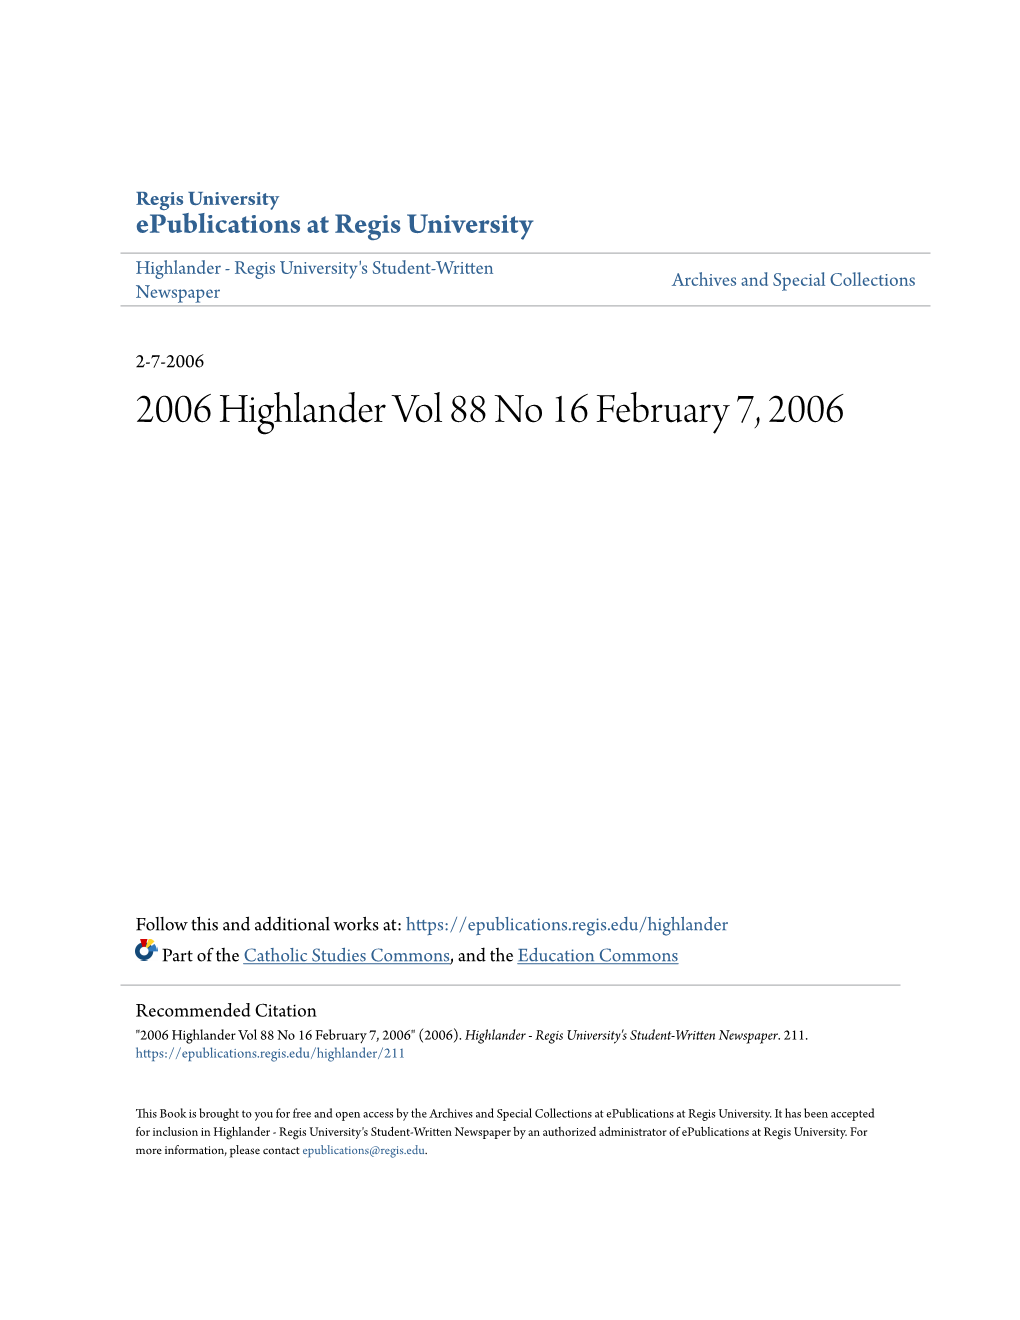 2006 Highlander Vol 88 No 16 February 7, 2006